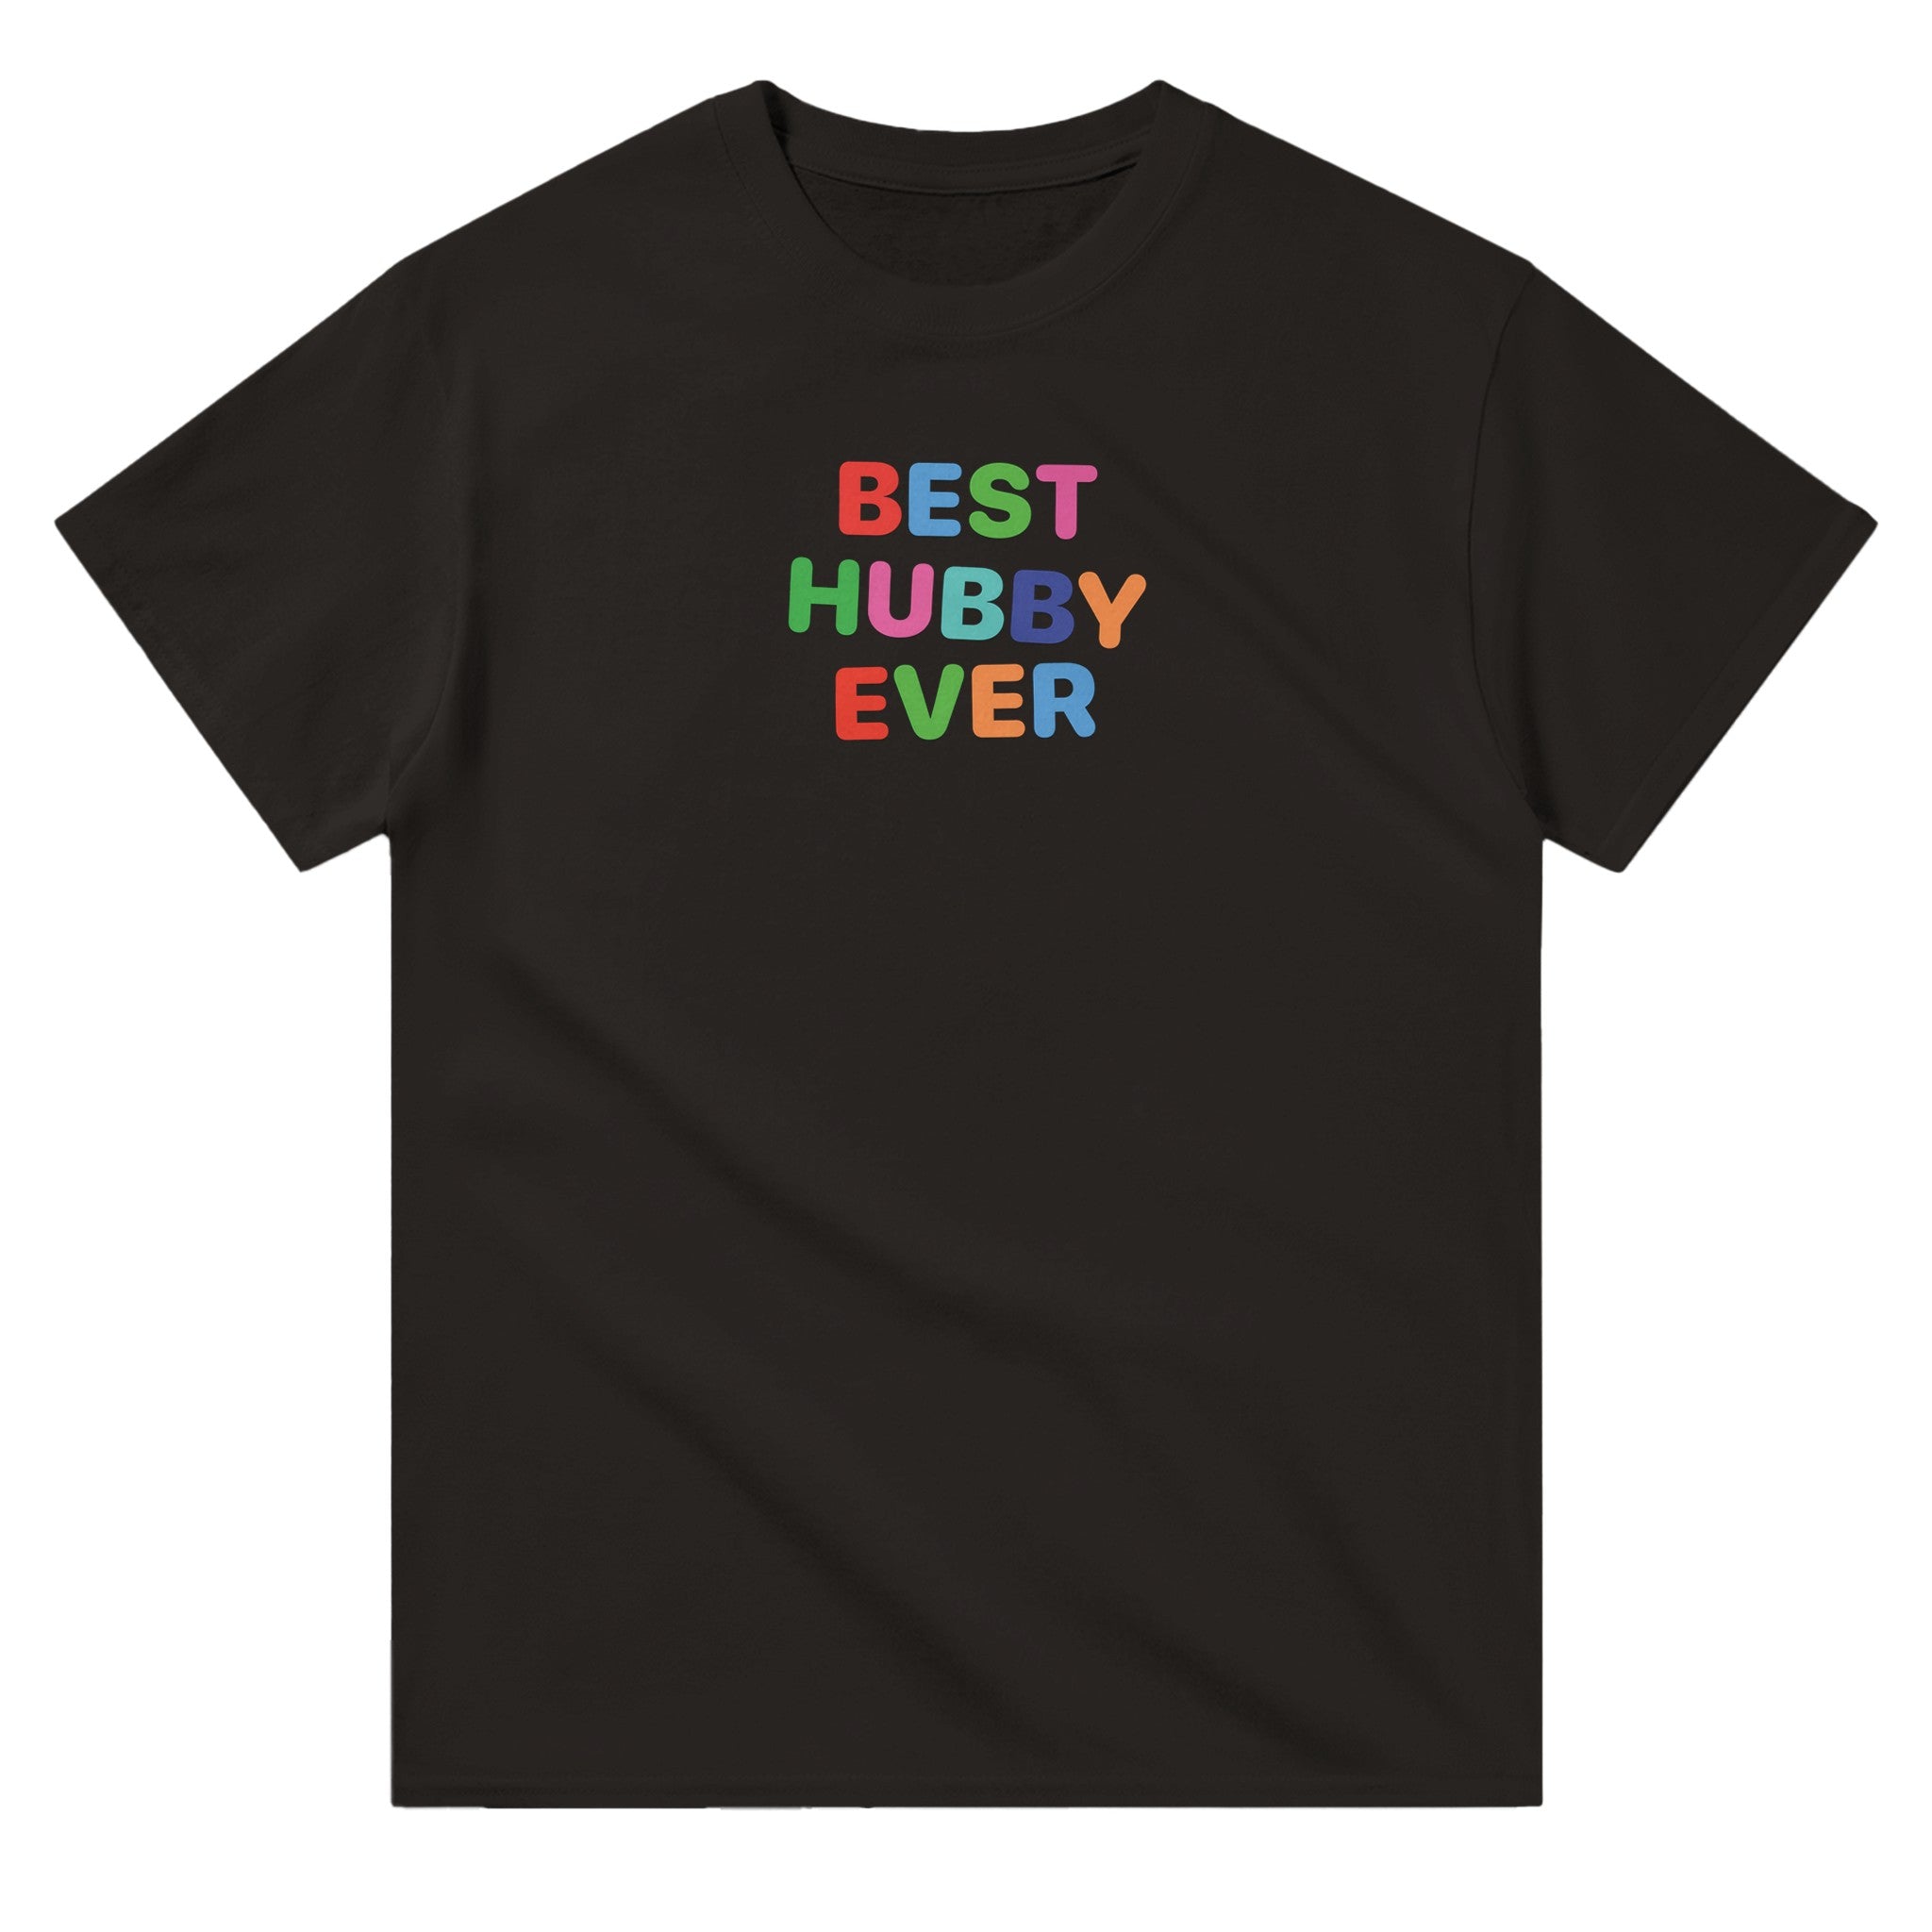 'Best Hubby Ever' classic tee - In Print We Trust